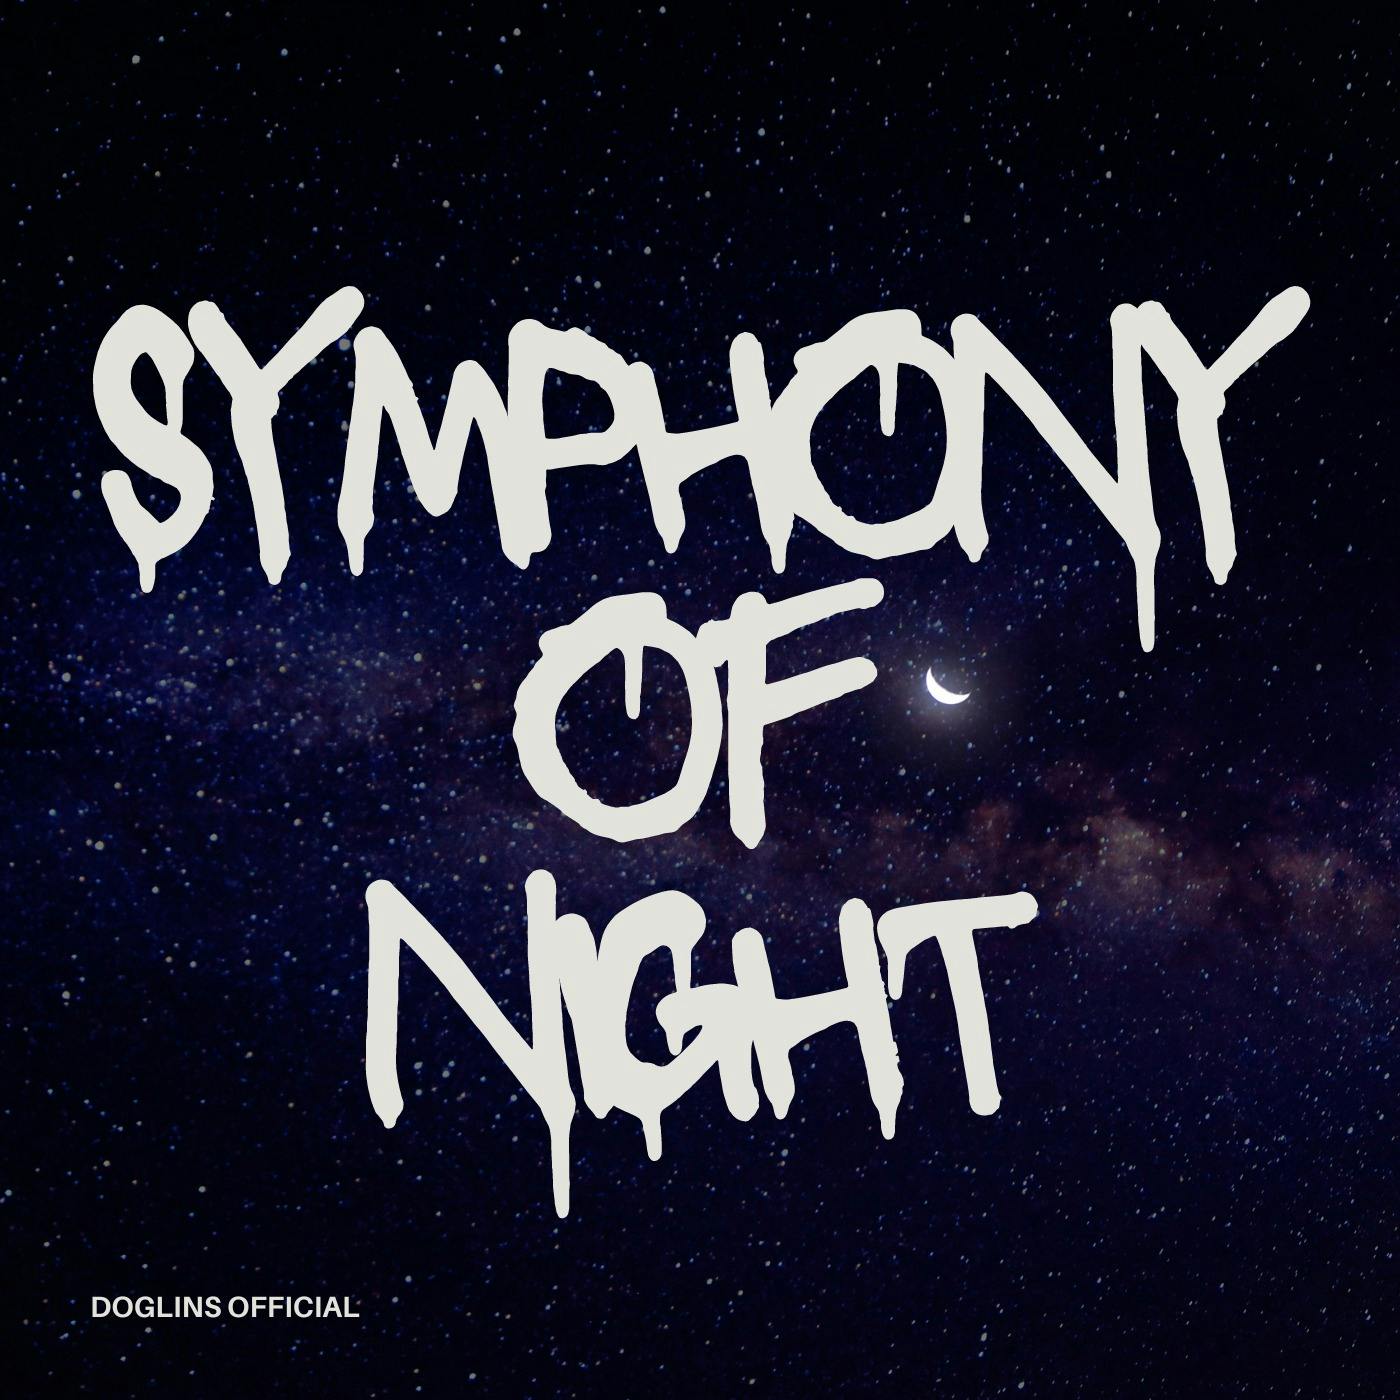 Symphony of night